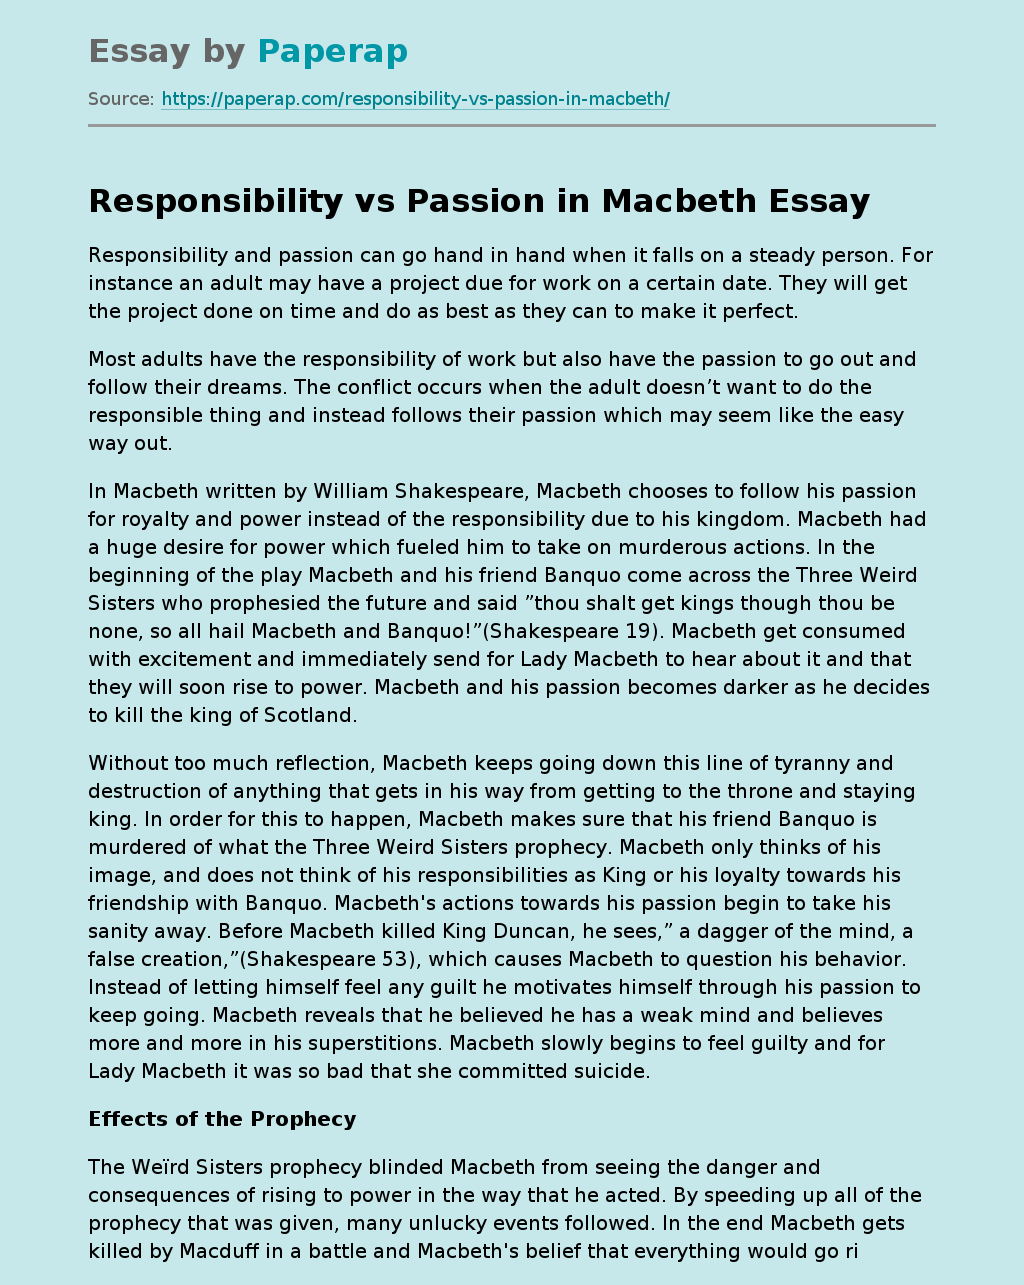 Responsibility vs Passion in Macbeth